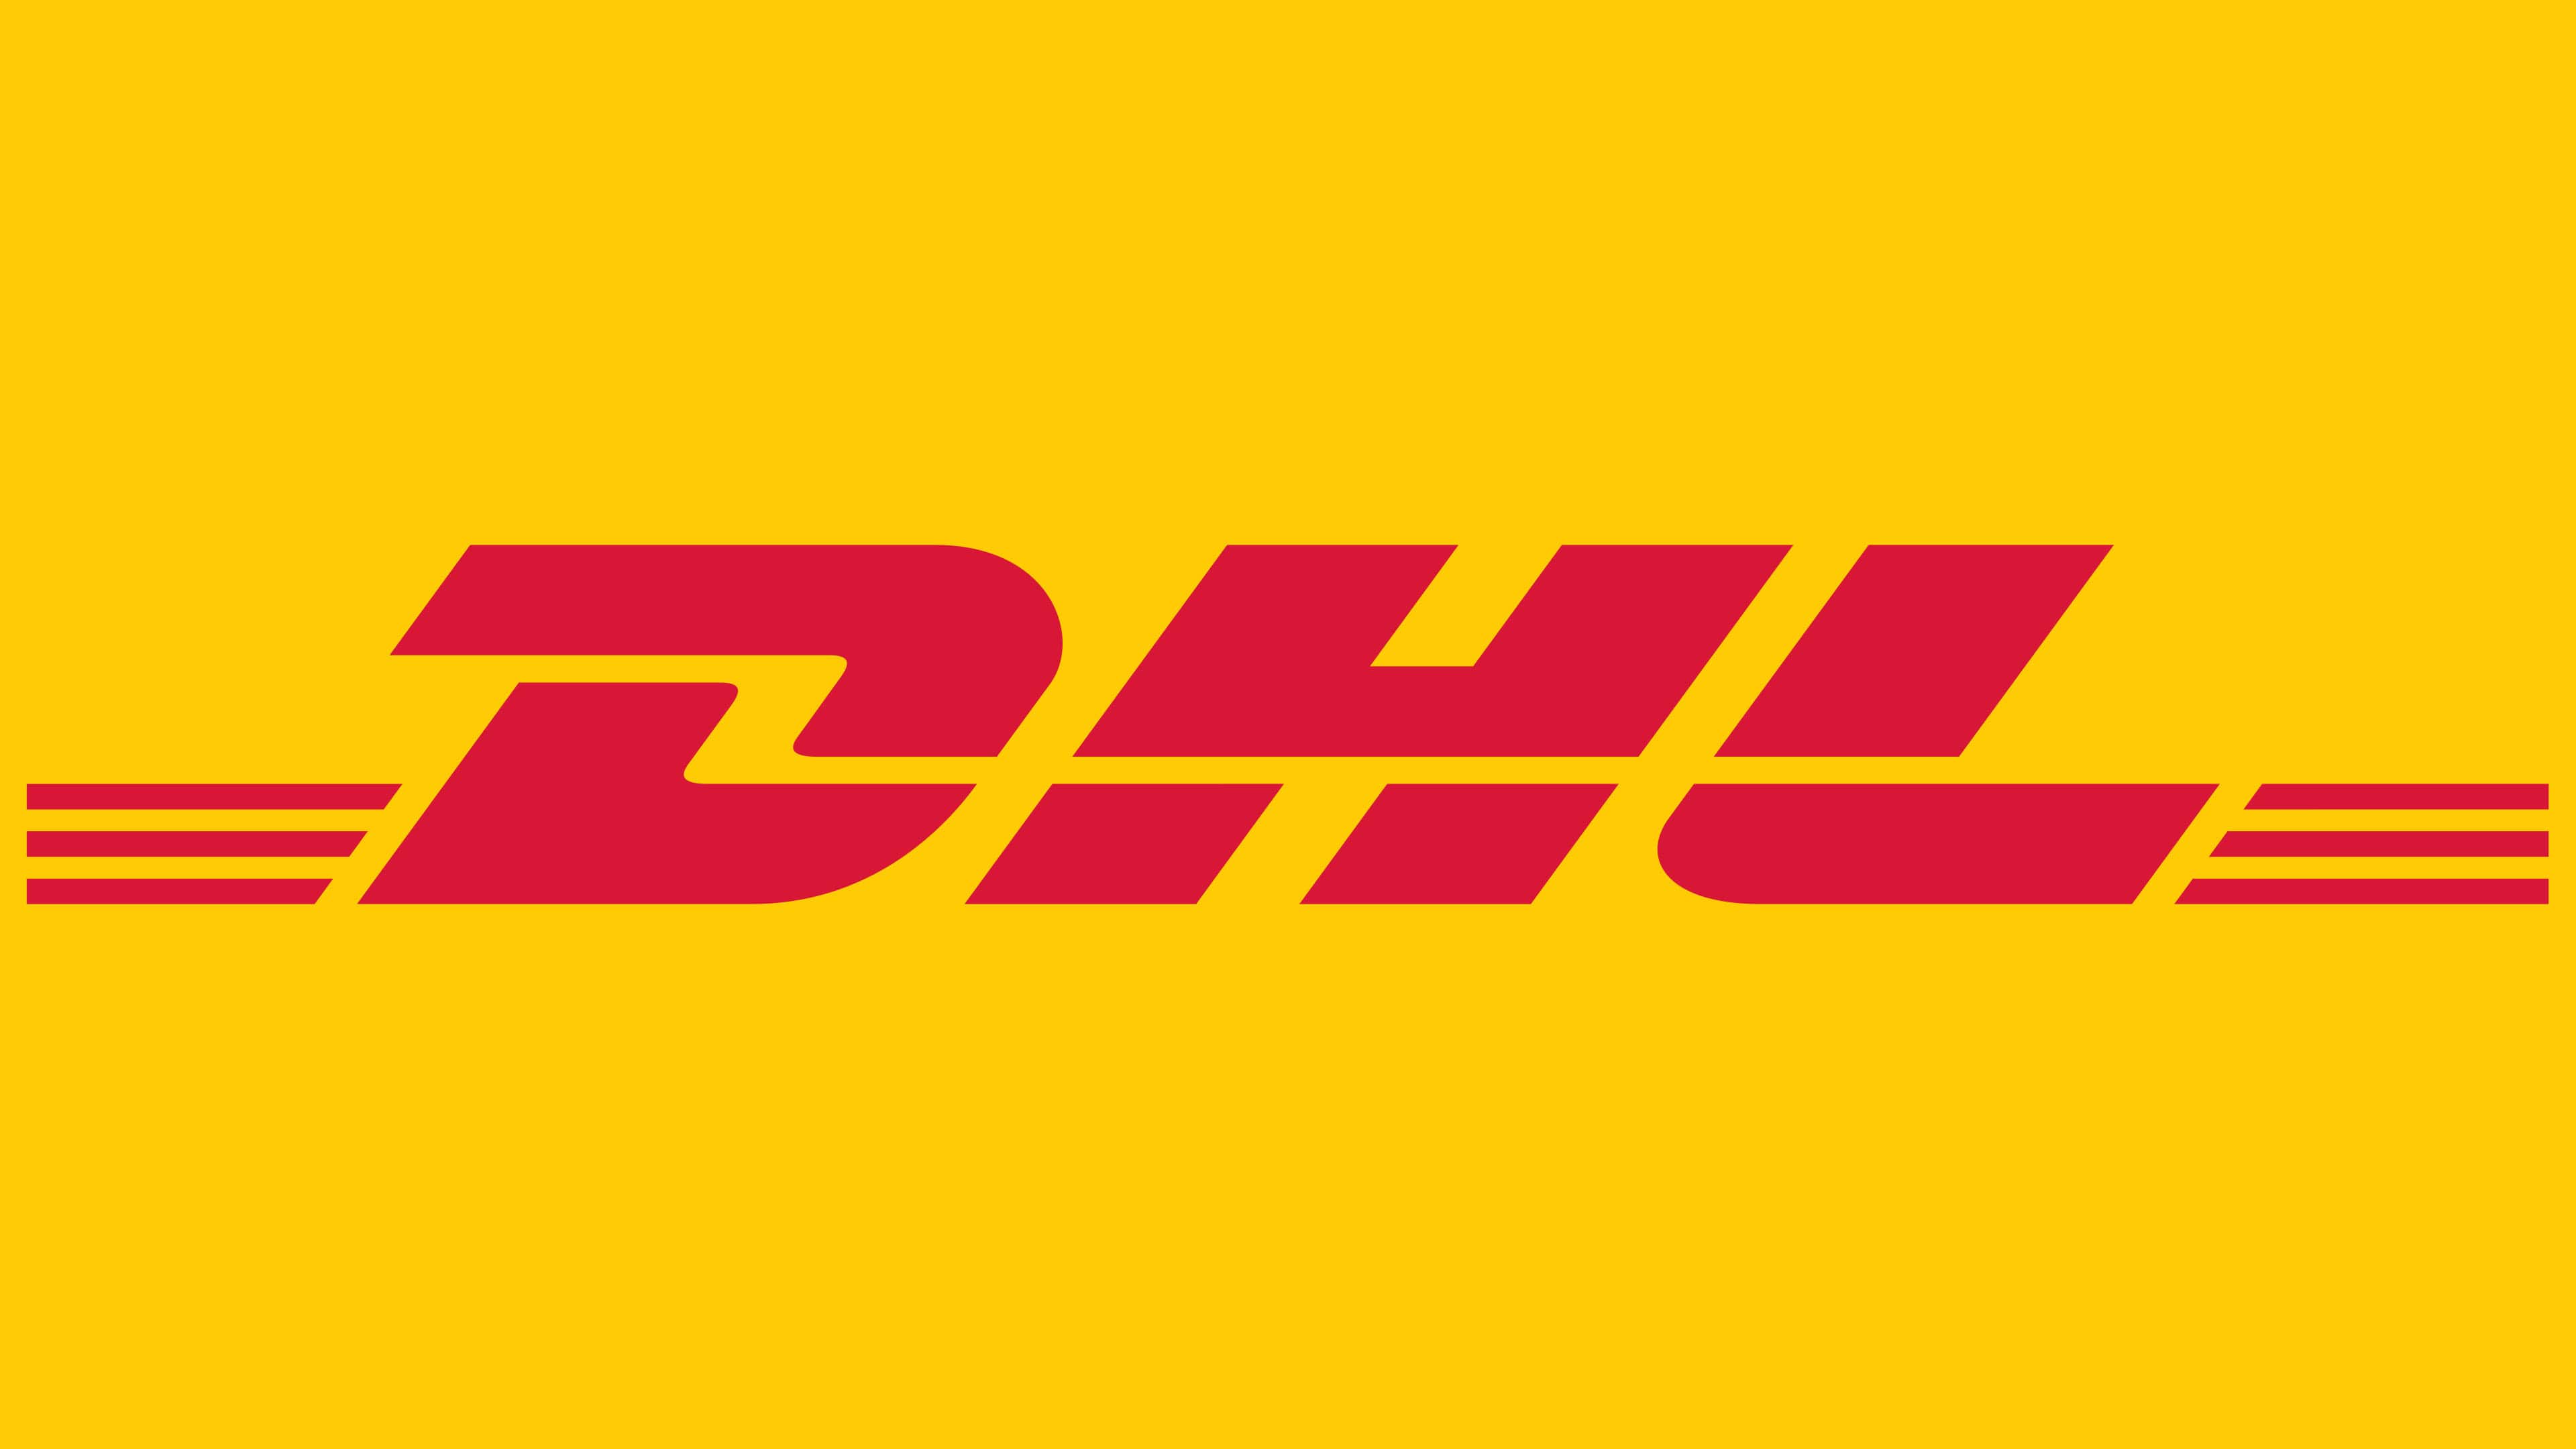 DHL-Emblema.jpg